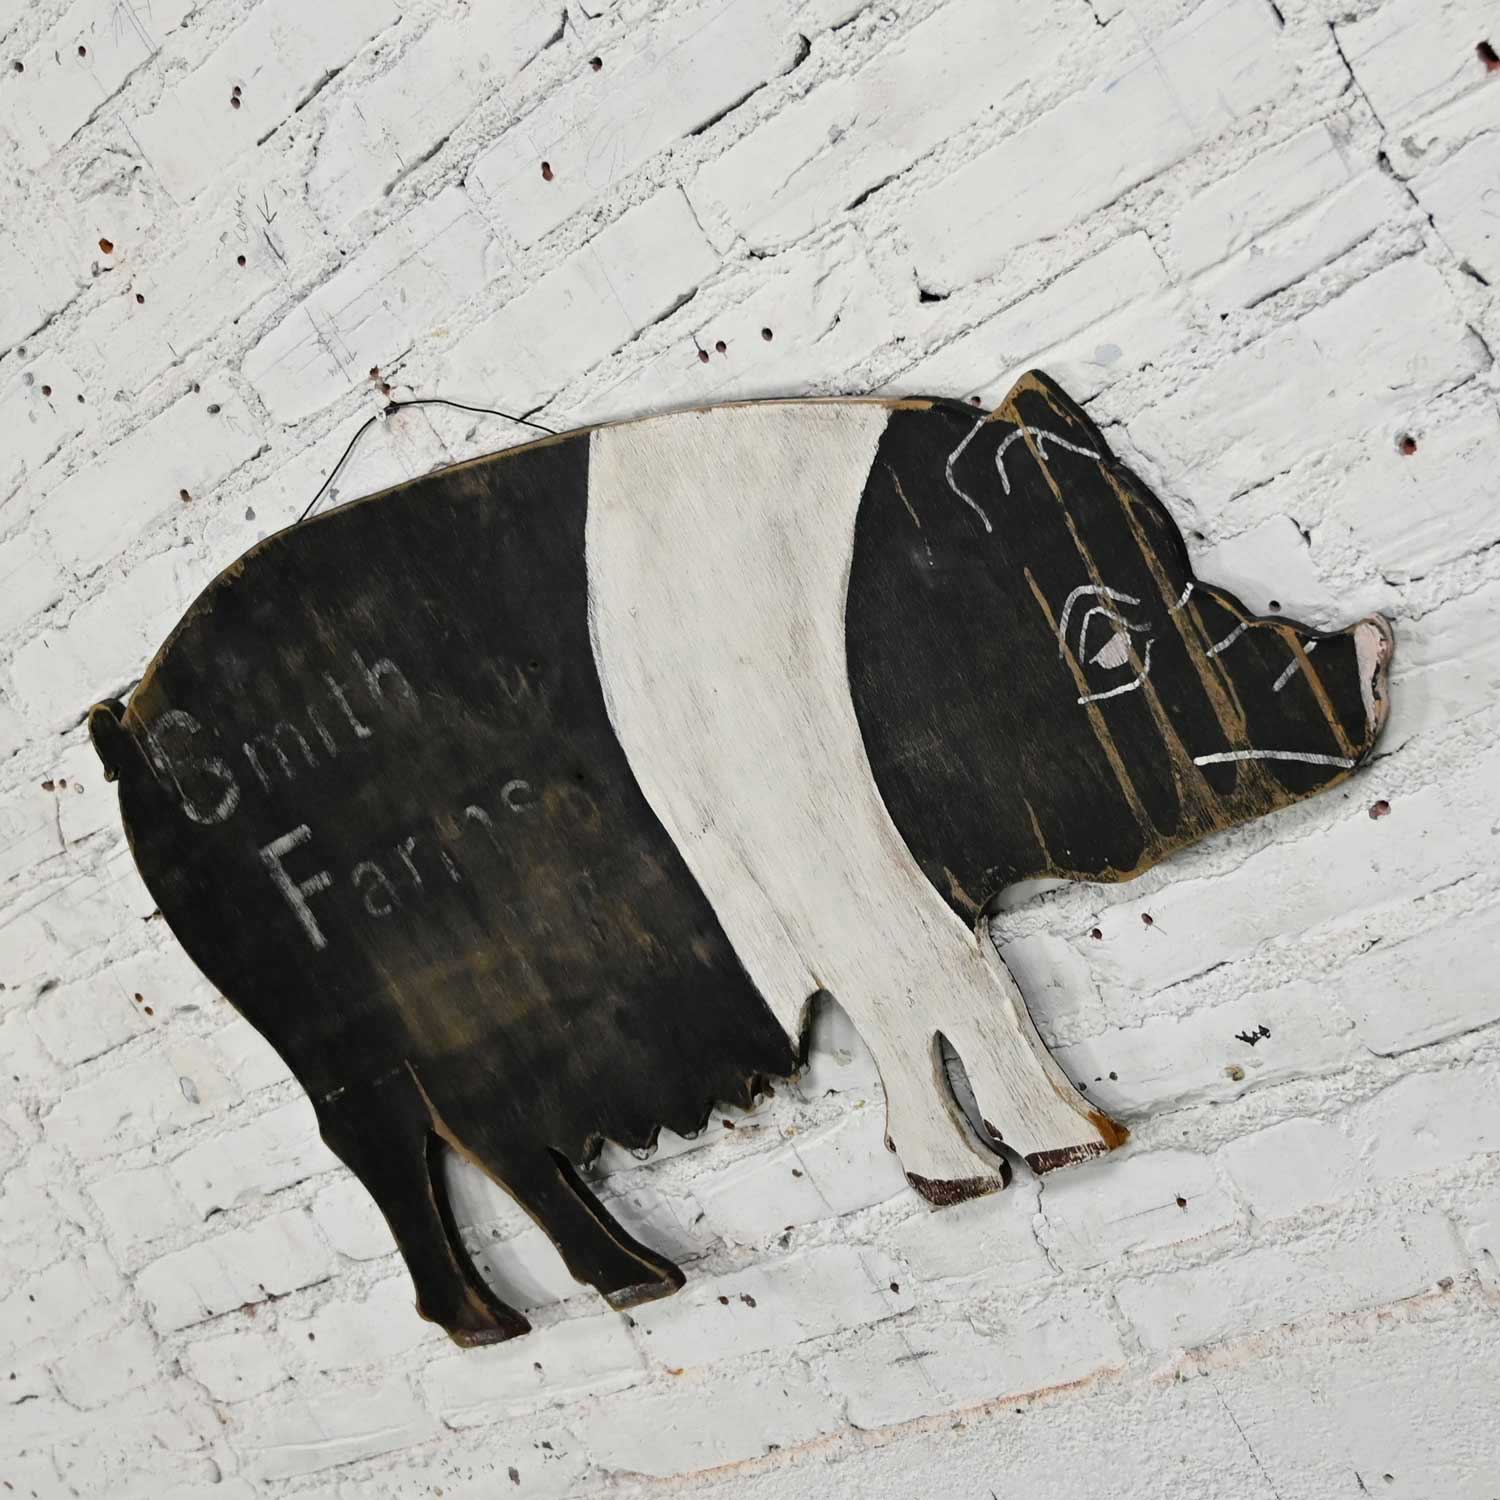 Vintage Folk Art Black & White Hampshire Pig Smith Farms Plywood Sign Wall Decor